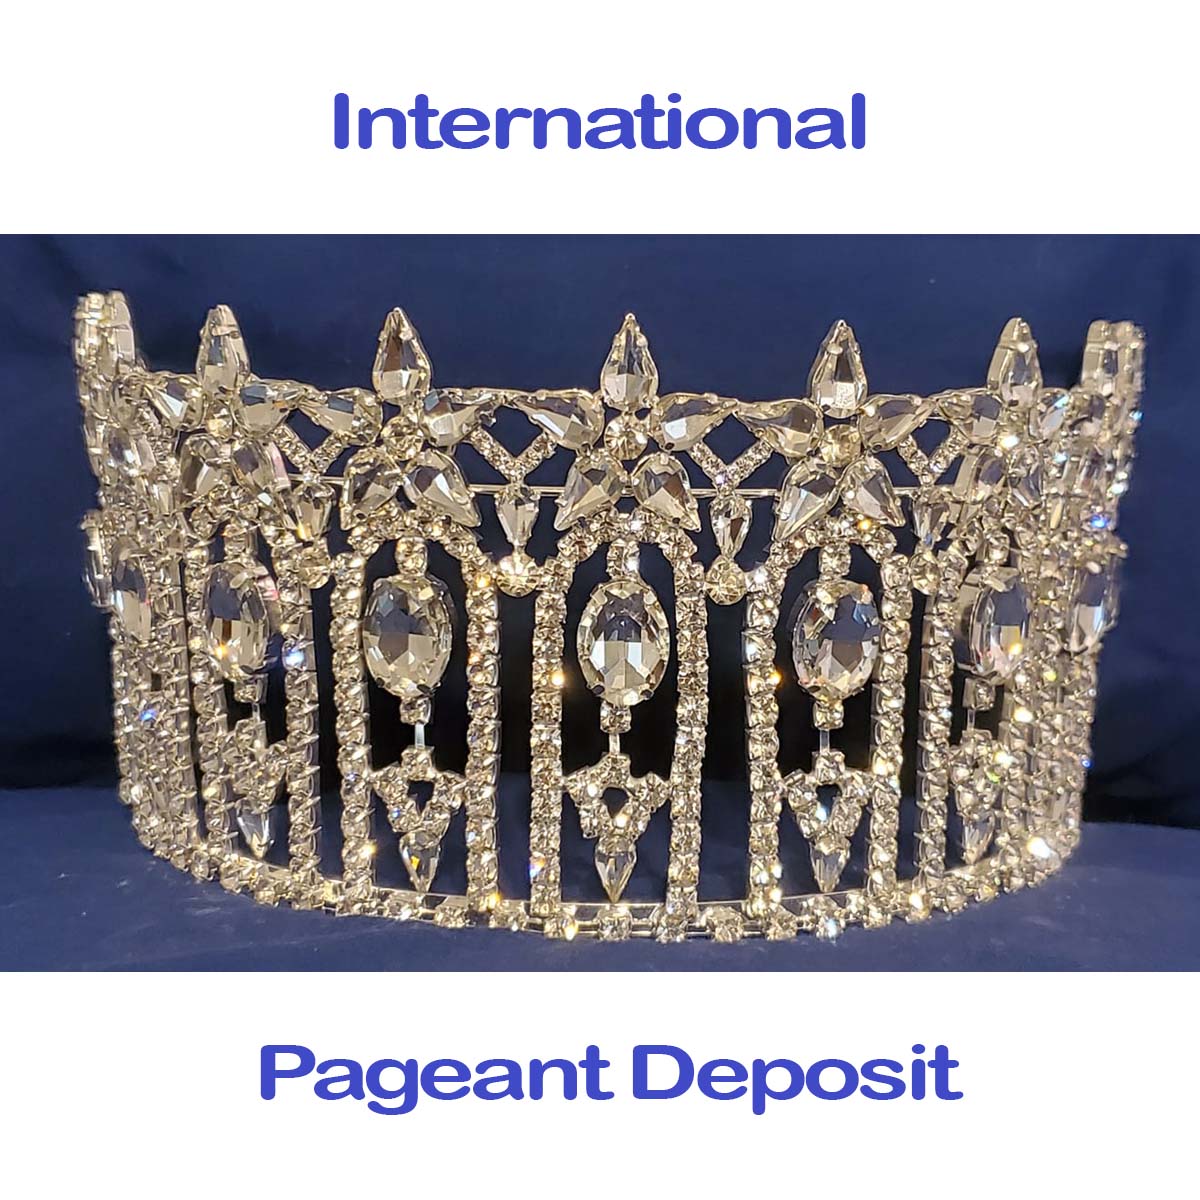 International Pageant Deposit